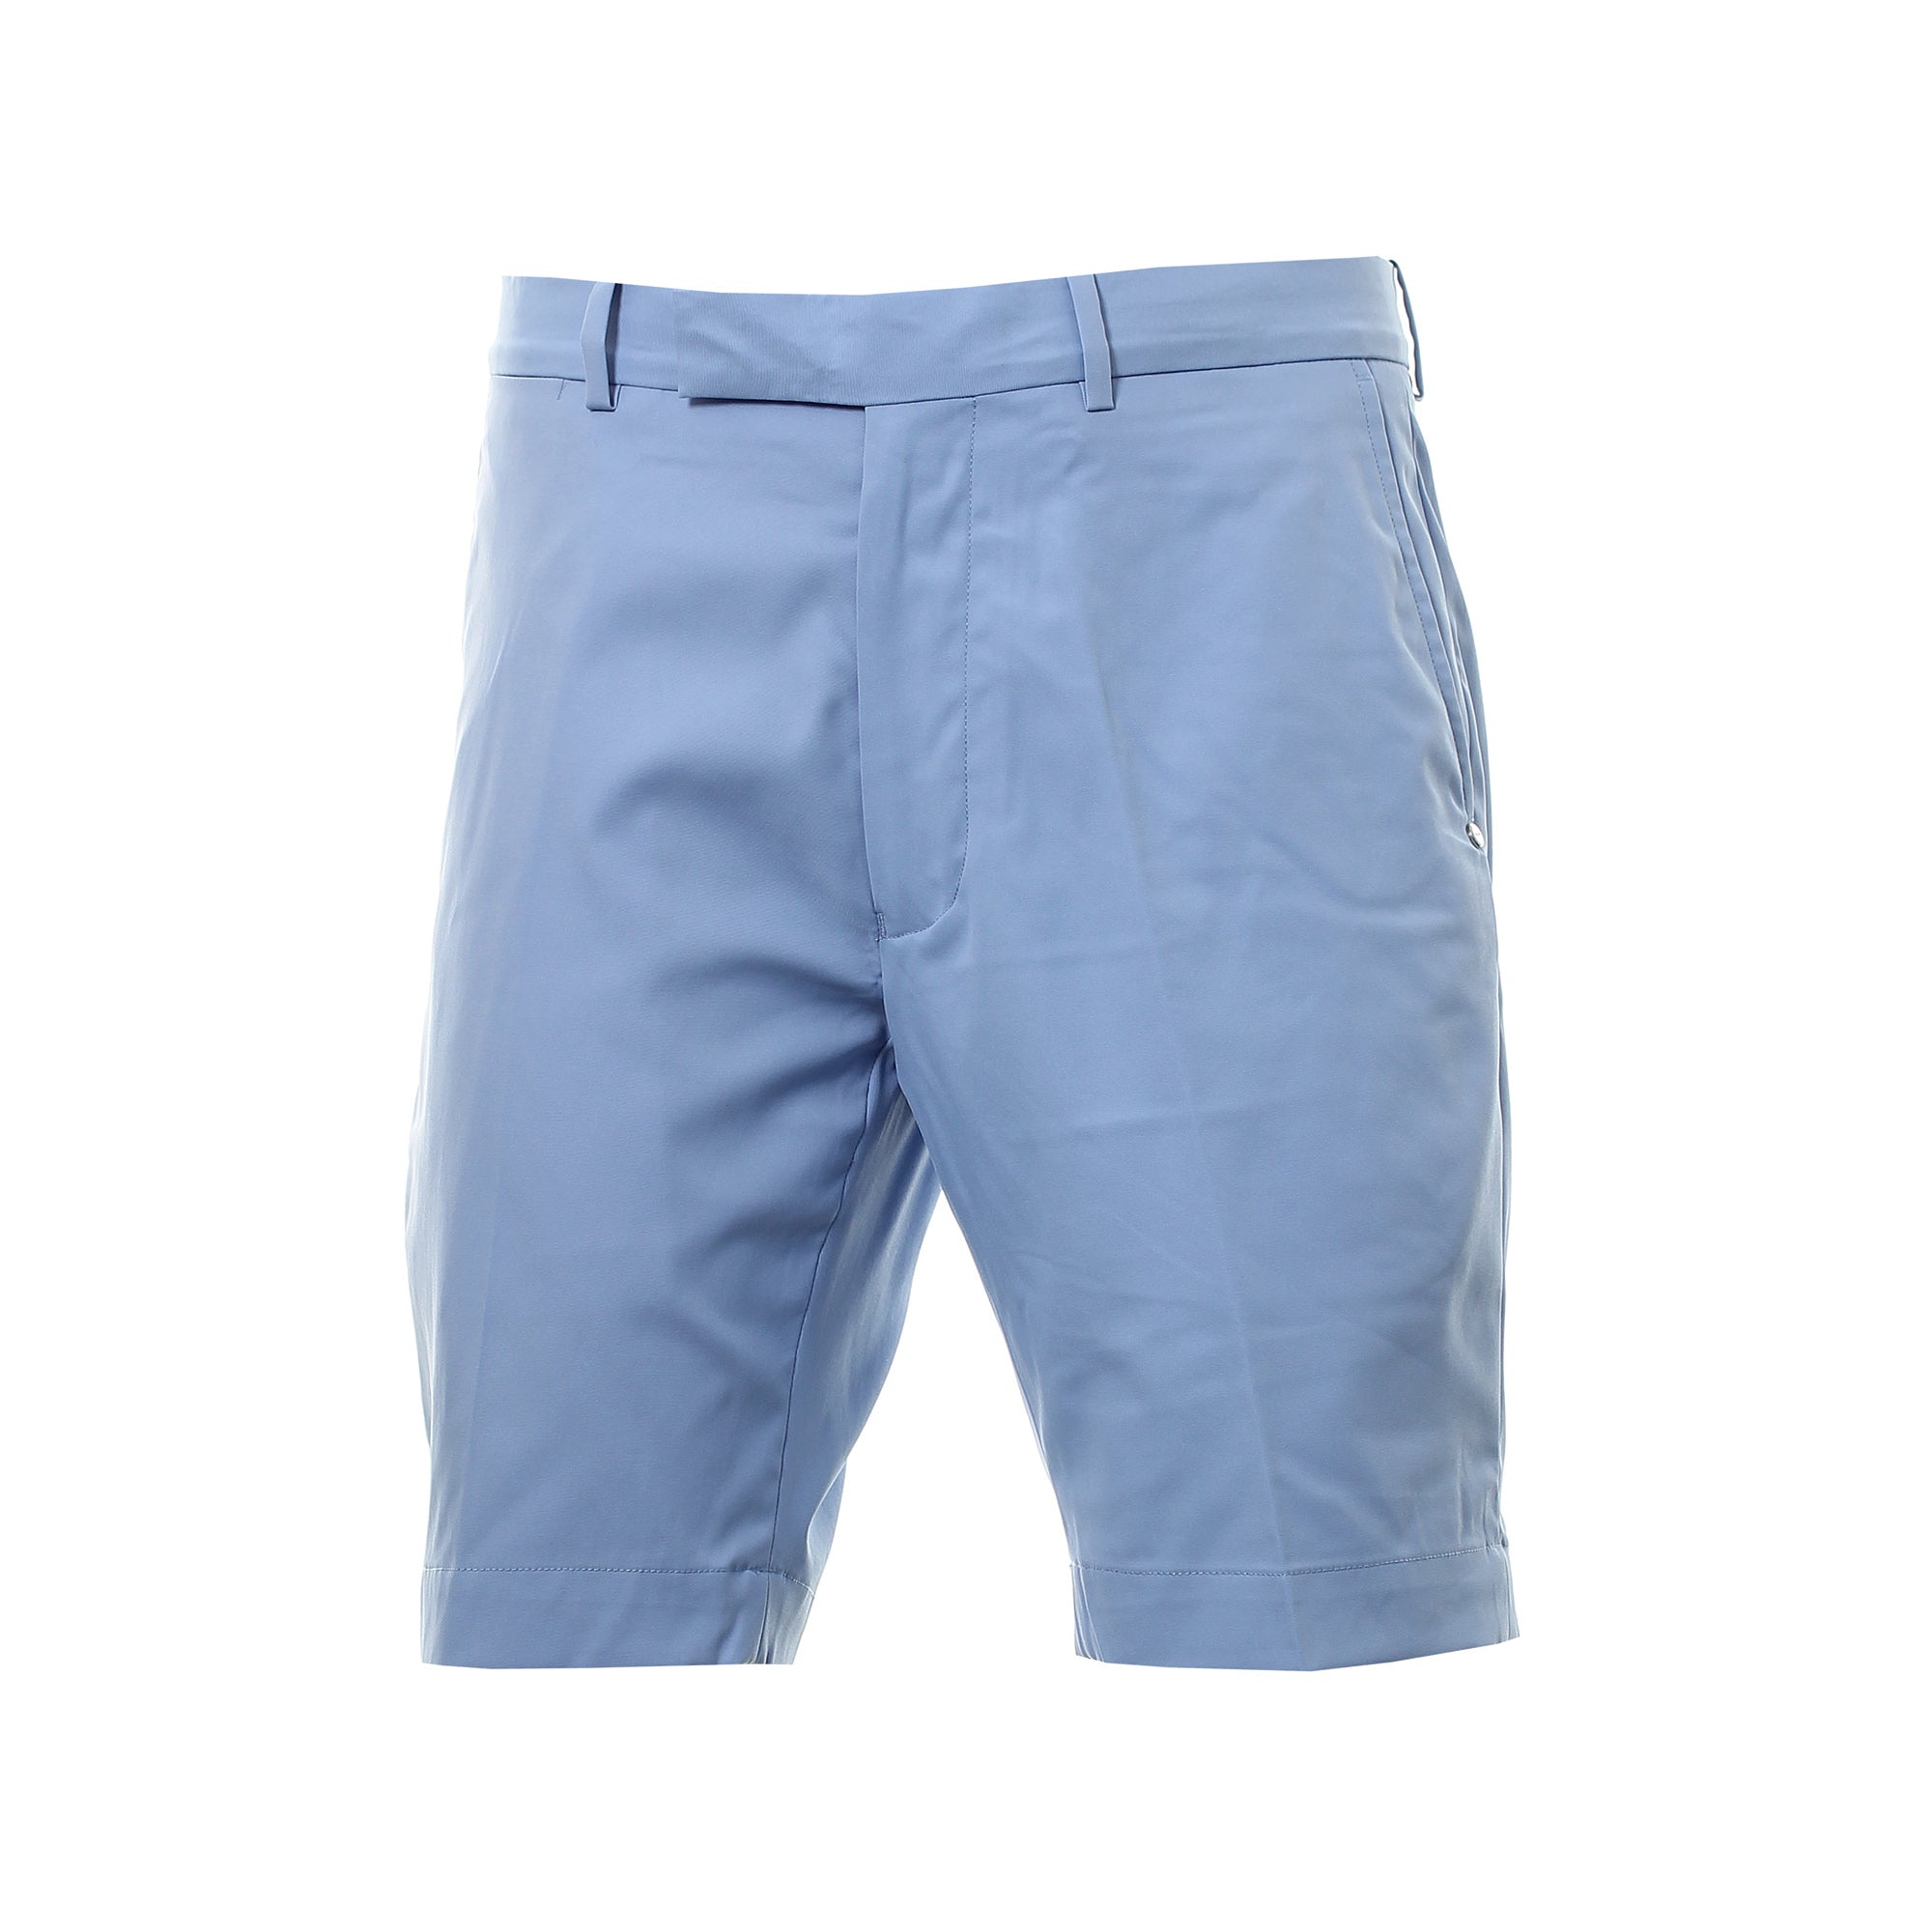 RLX Ralph Lauren Stretch Tailored Fit Short 785758099 Blue & Function18